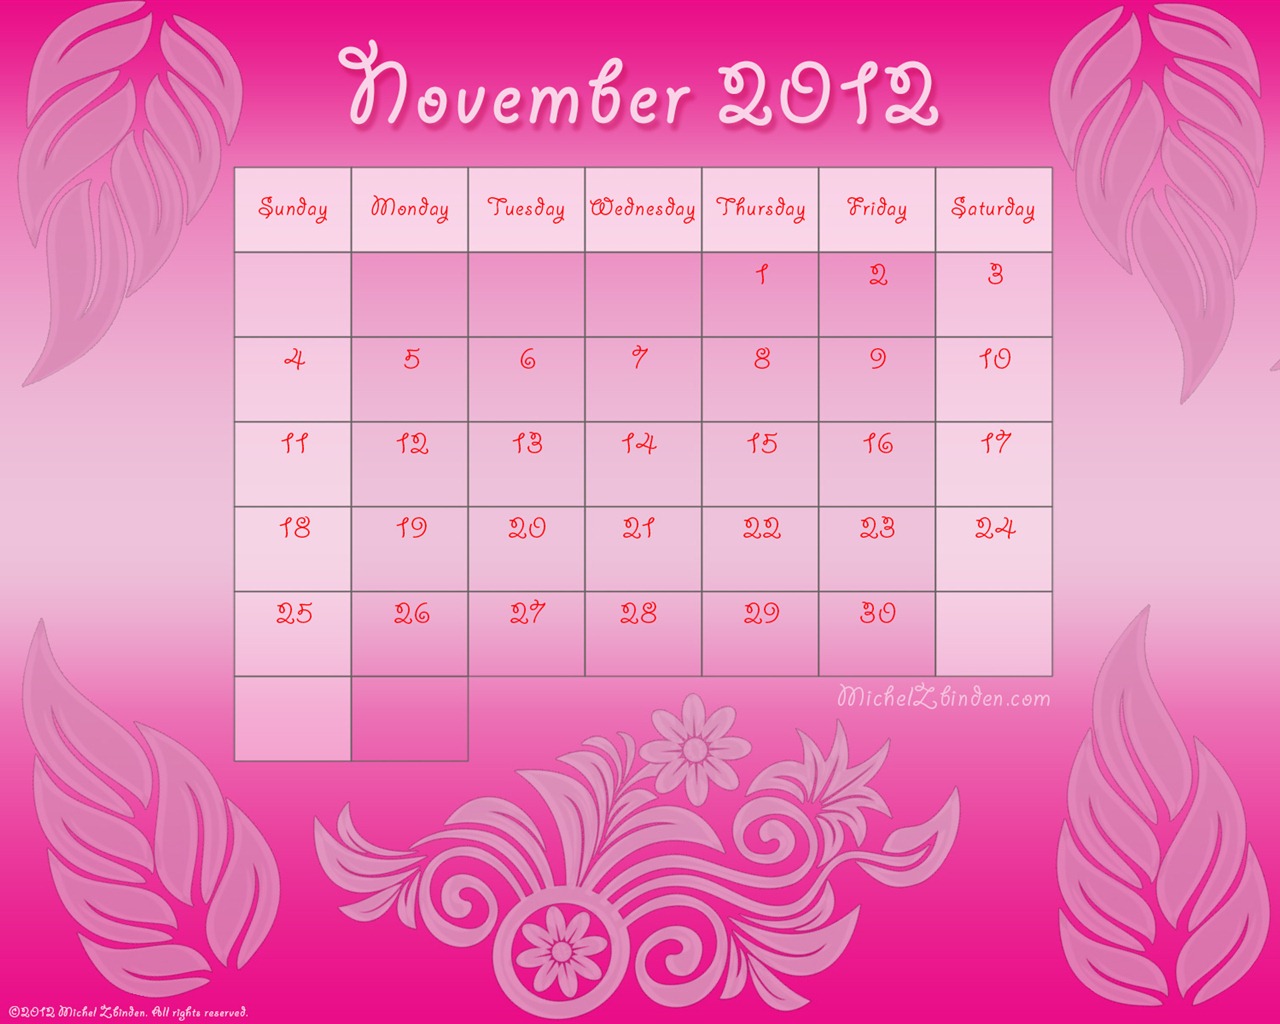 November 2012 Kalender Wallpaper (1) #3 1280x1024 Wallpaper